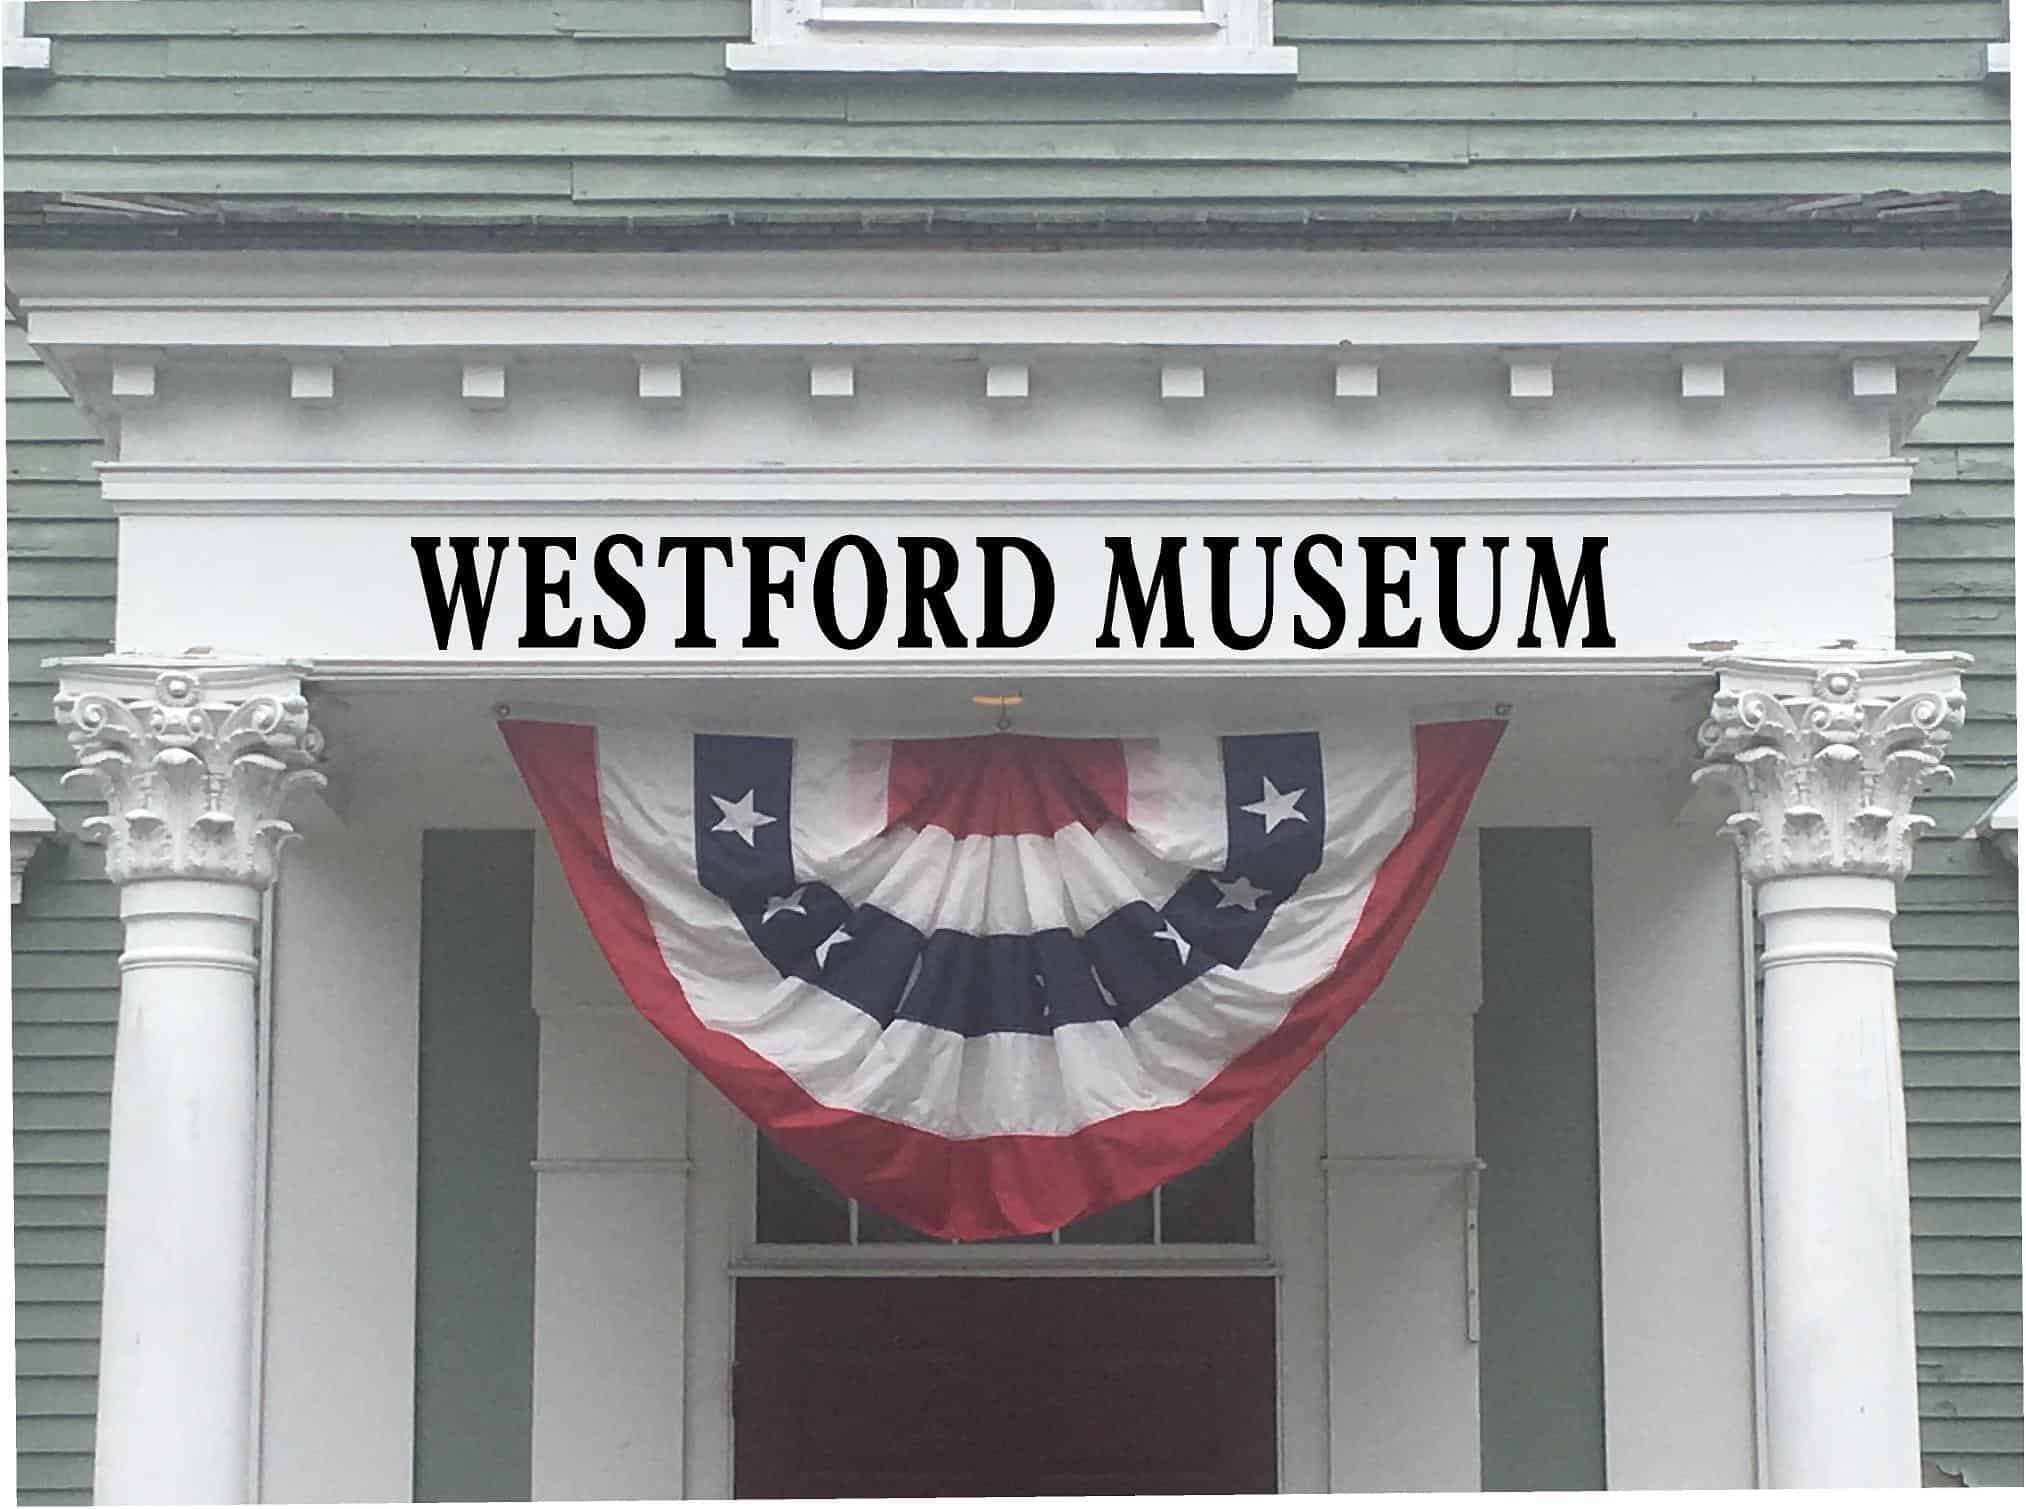 Visit the Westford Museum